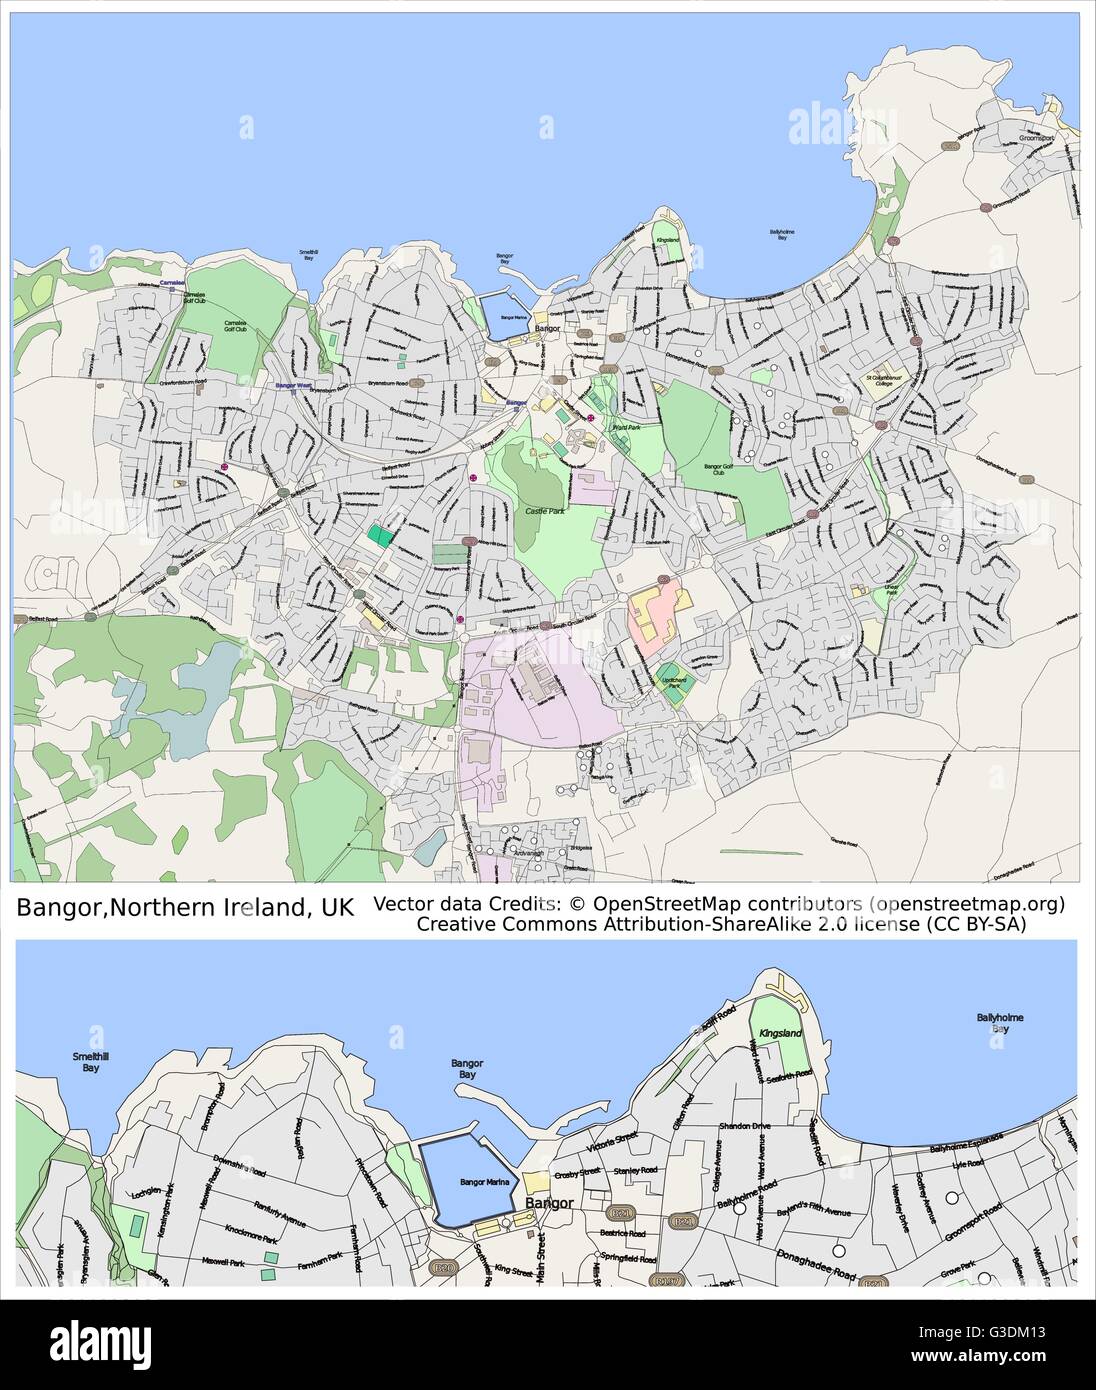 Bangor Northern Ireland Uk City Map G3DM13 